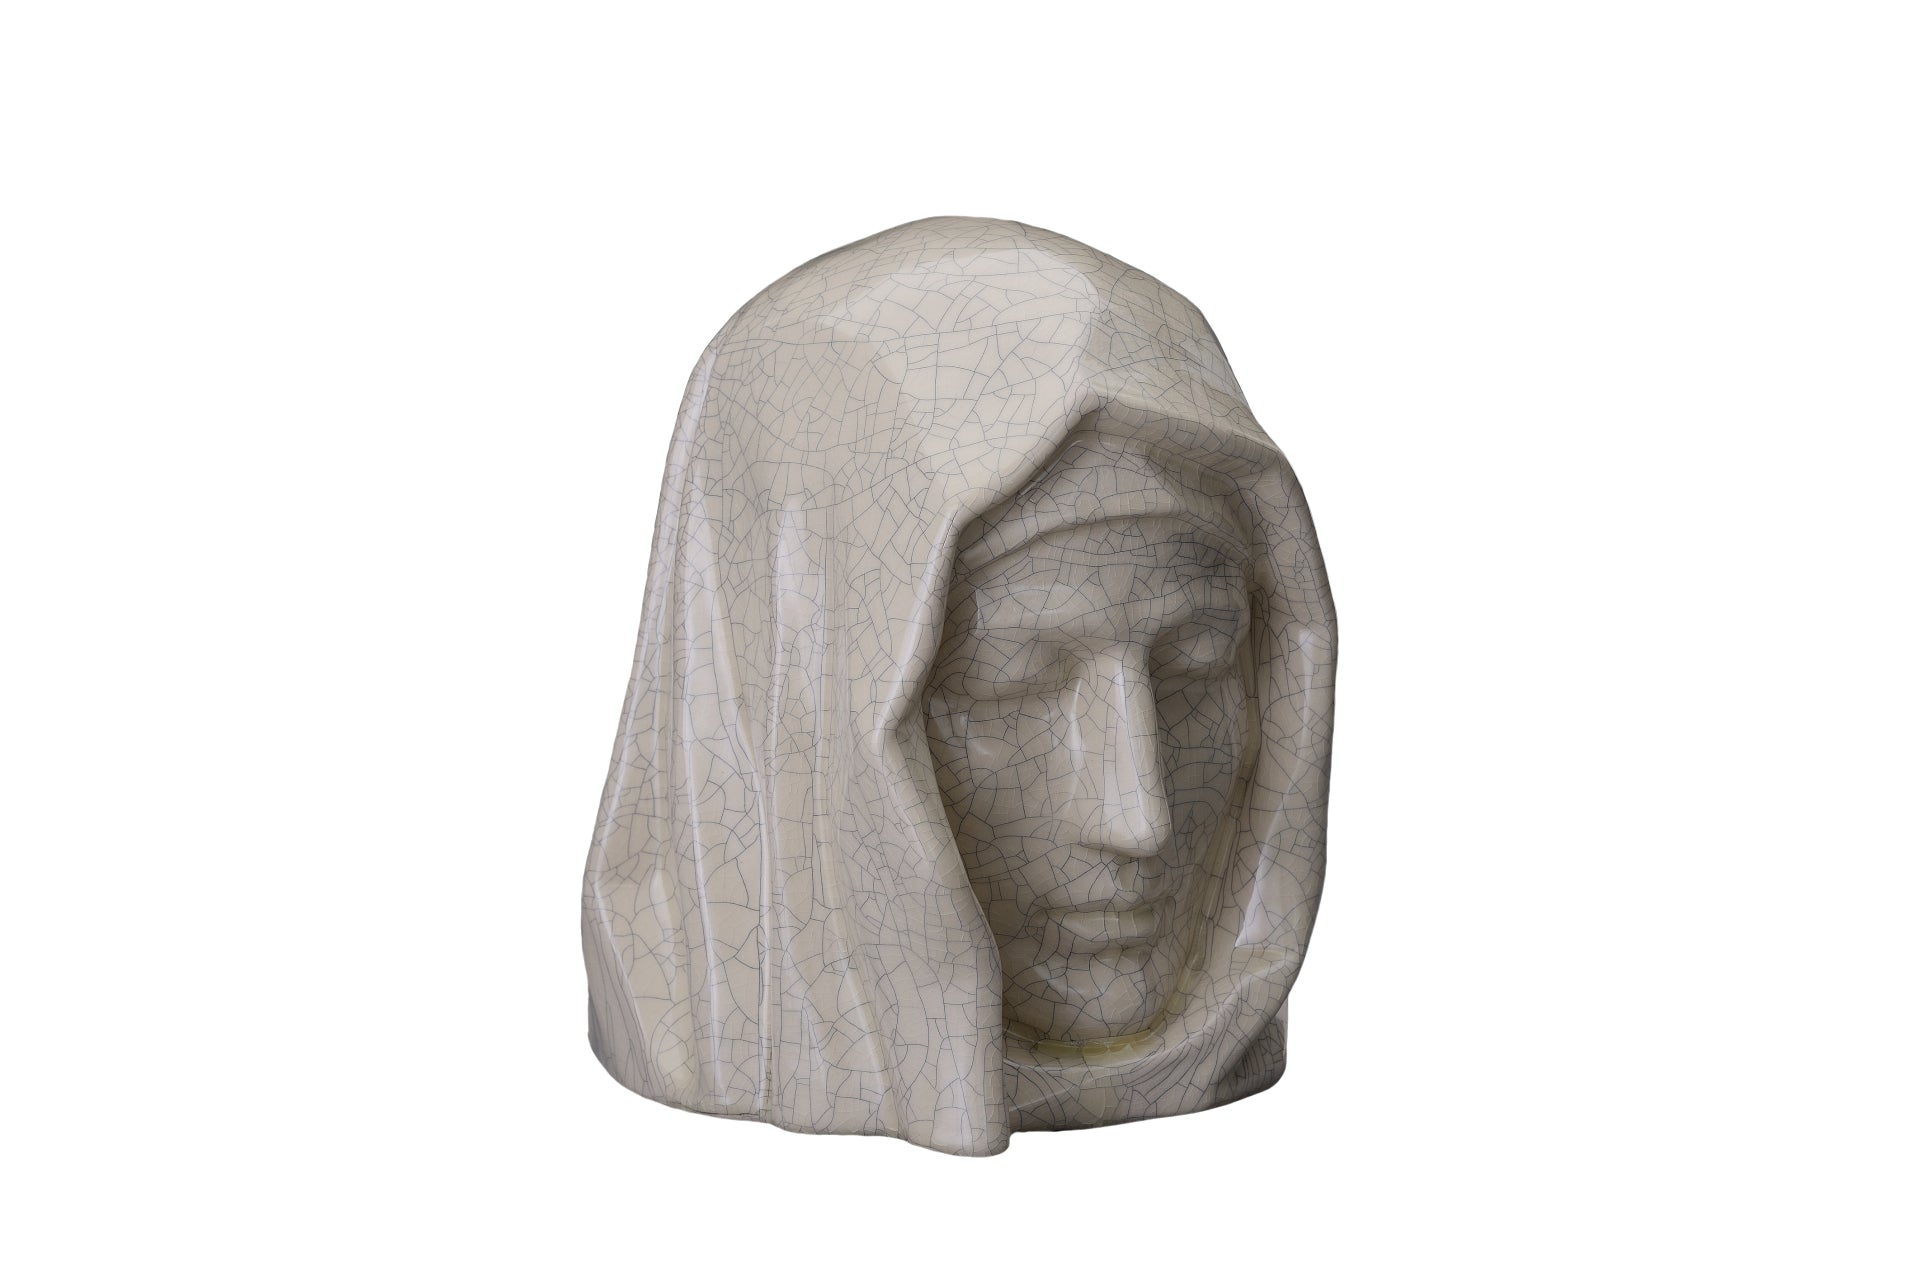 Urn Holy Mother Ceramic